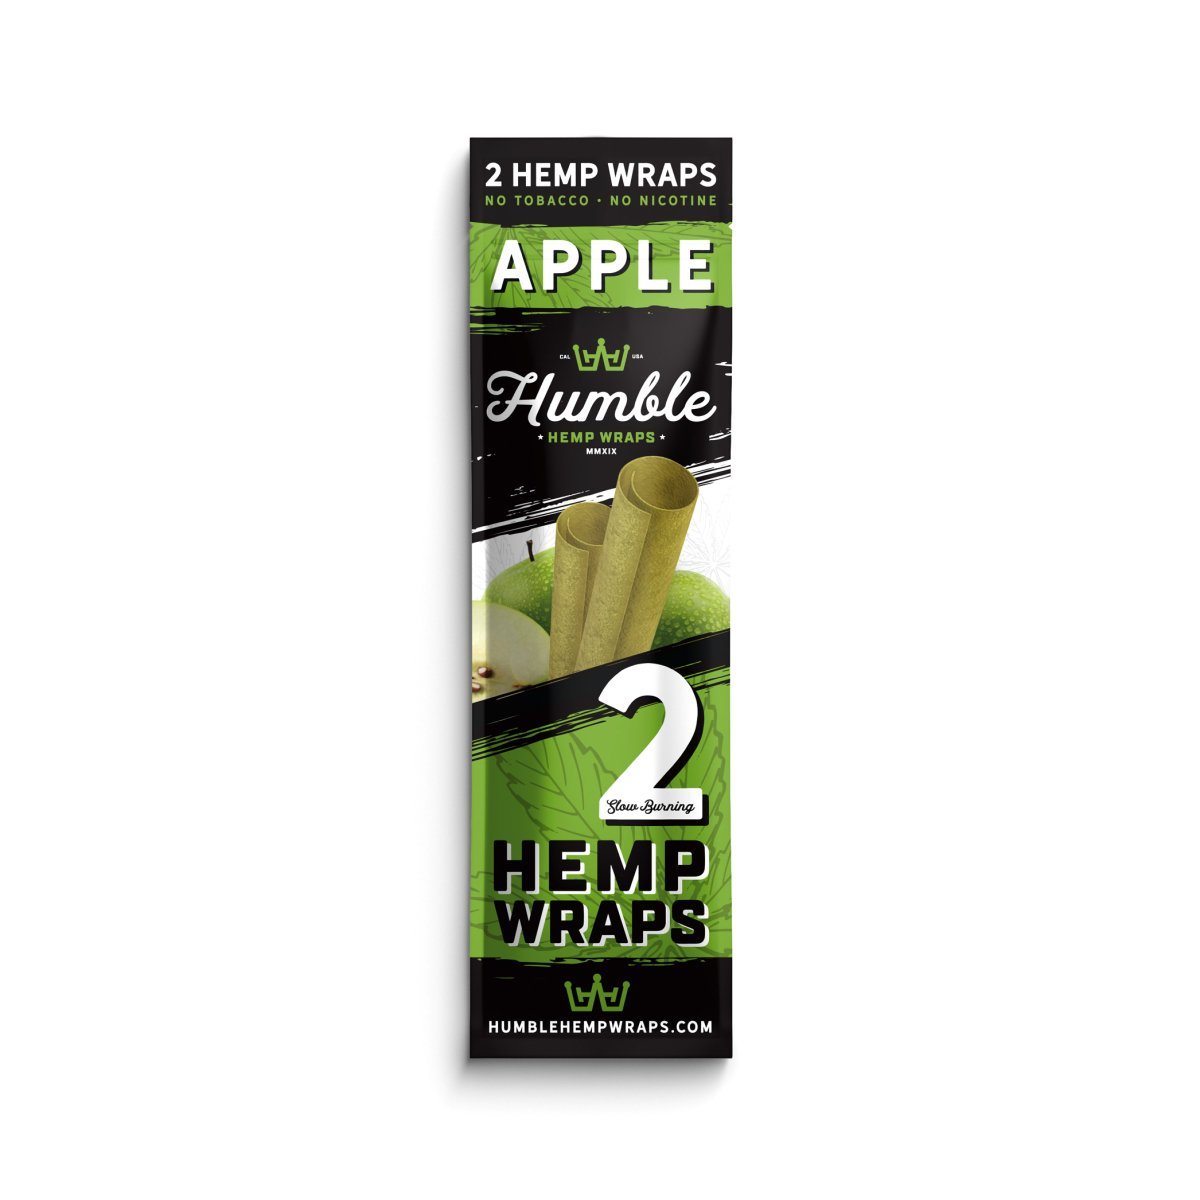 Humble Hemp Wraps - Apple Flavor - 25 Pack Flower Power Packages 